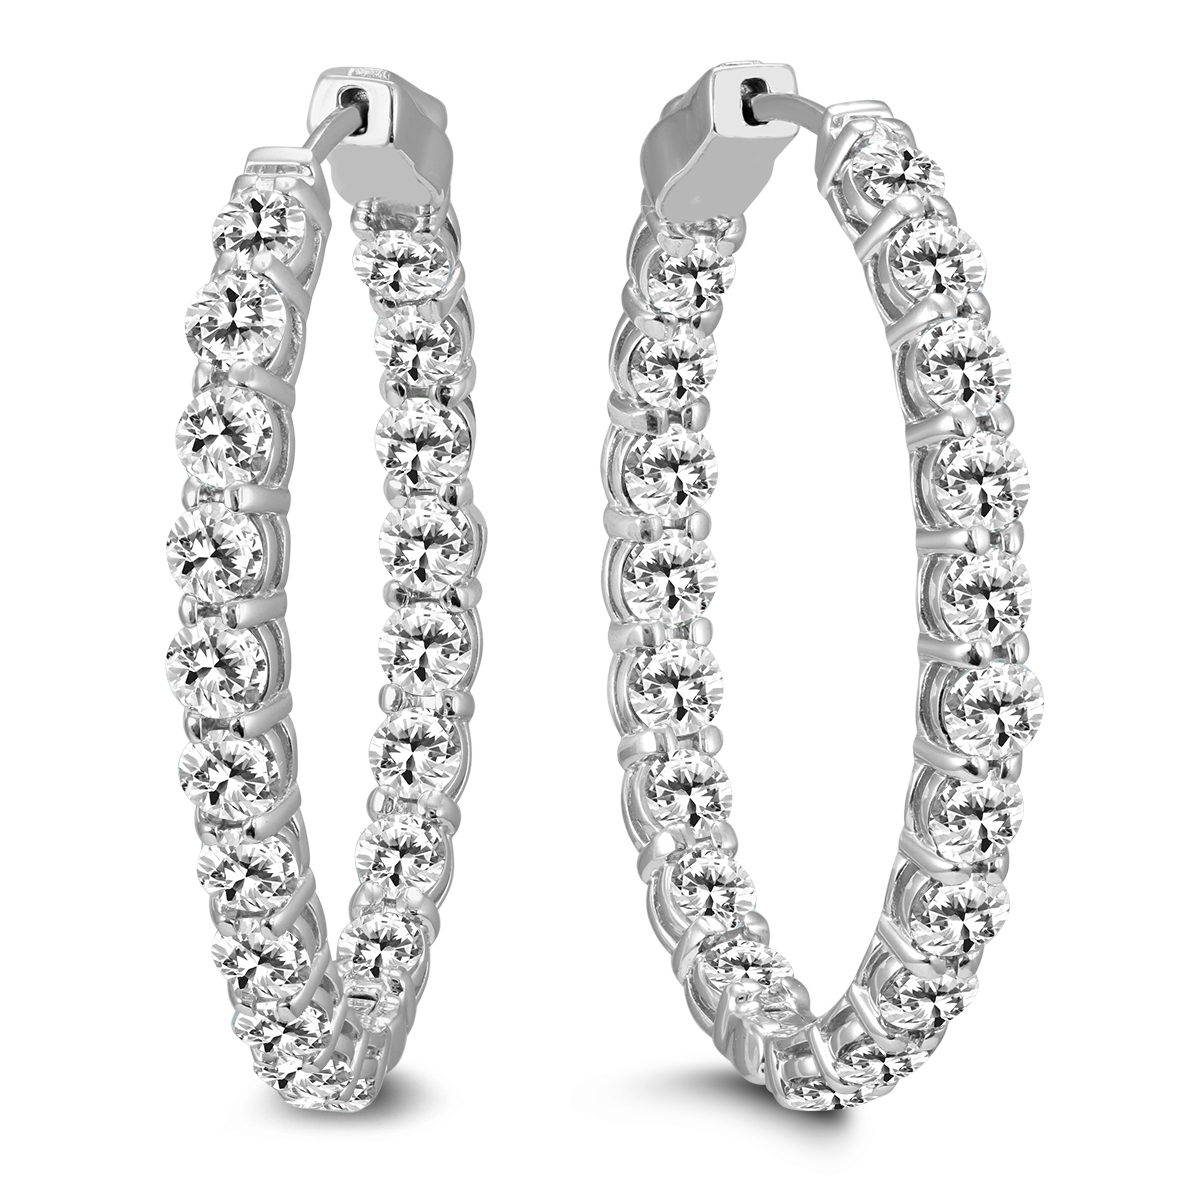 10 Carat TW Oval Diamond Hoop Earrings with Push Button Locks in 14K White Gold